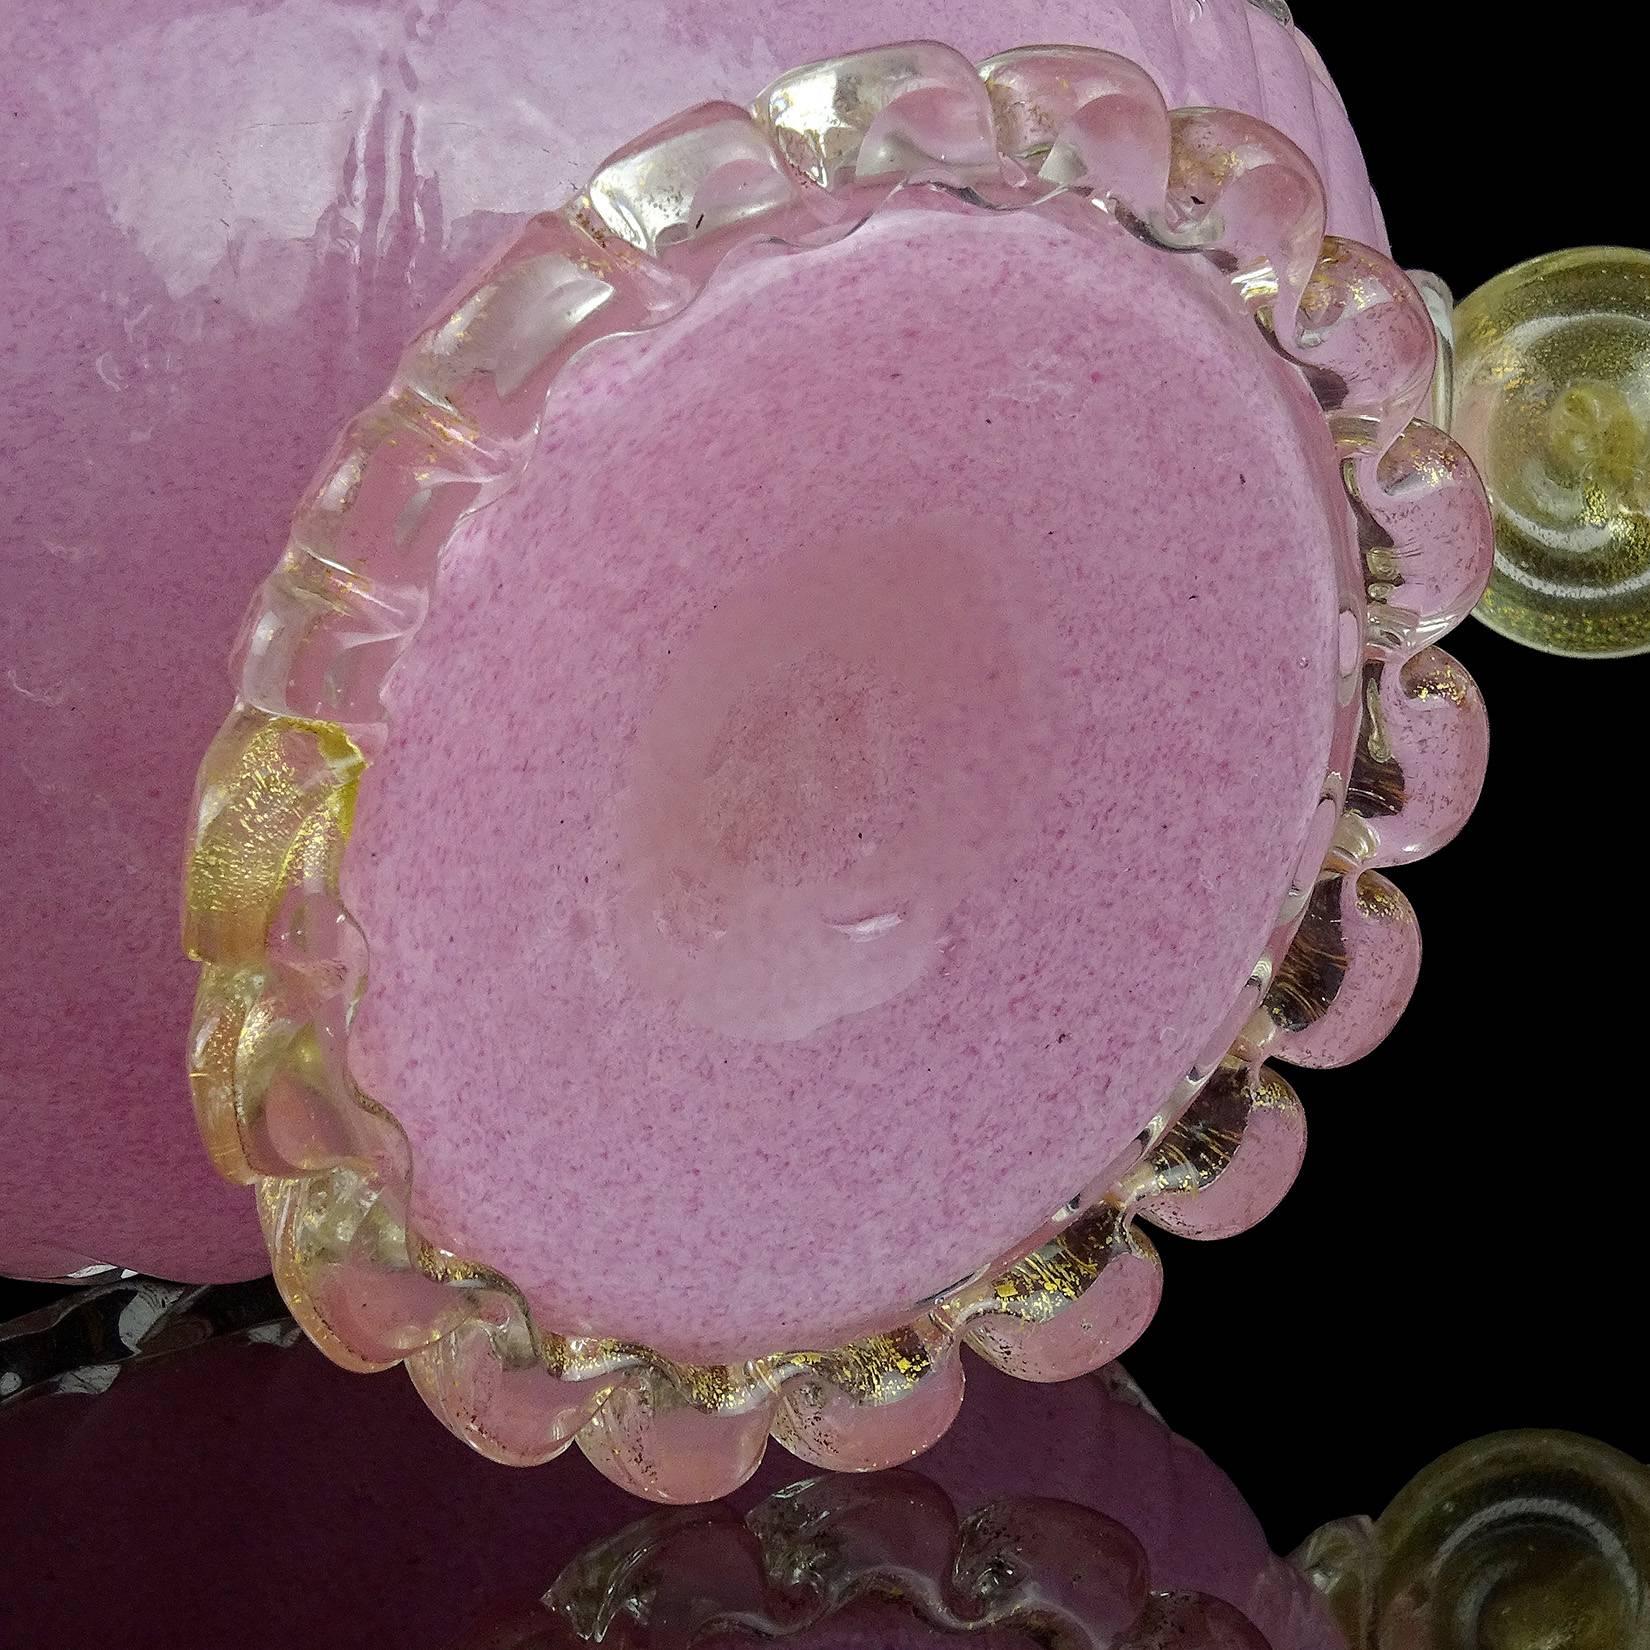 Barovier Toso Murano Pink Gold Flecks Italian Art Glass Fruit Compote Bowl 1